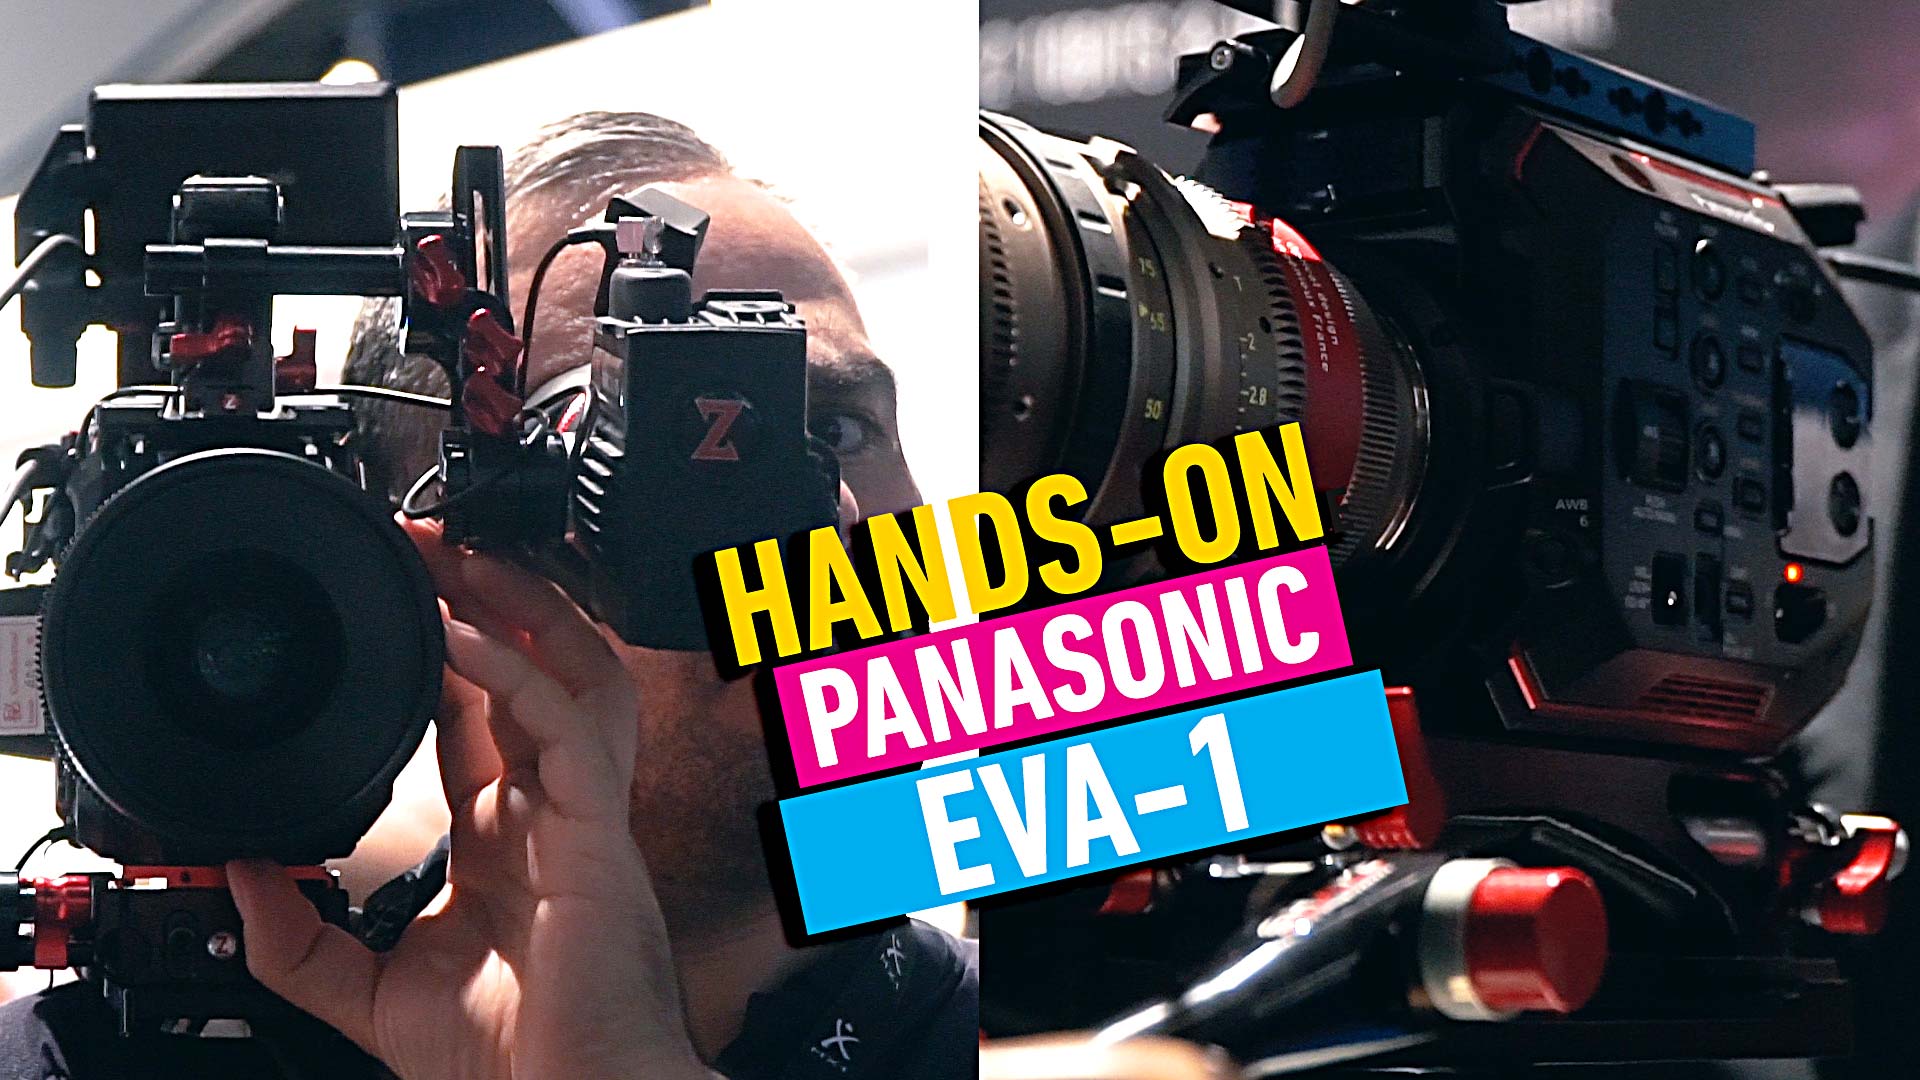 Panasonic EVA-1 IBC 2017